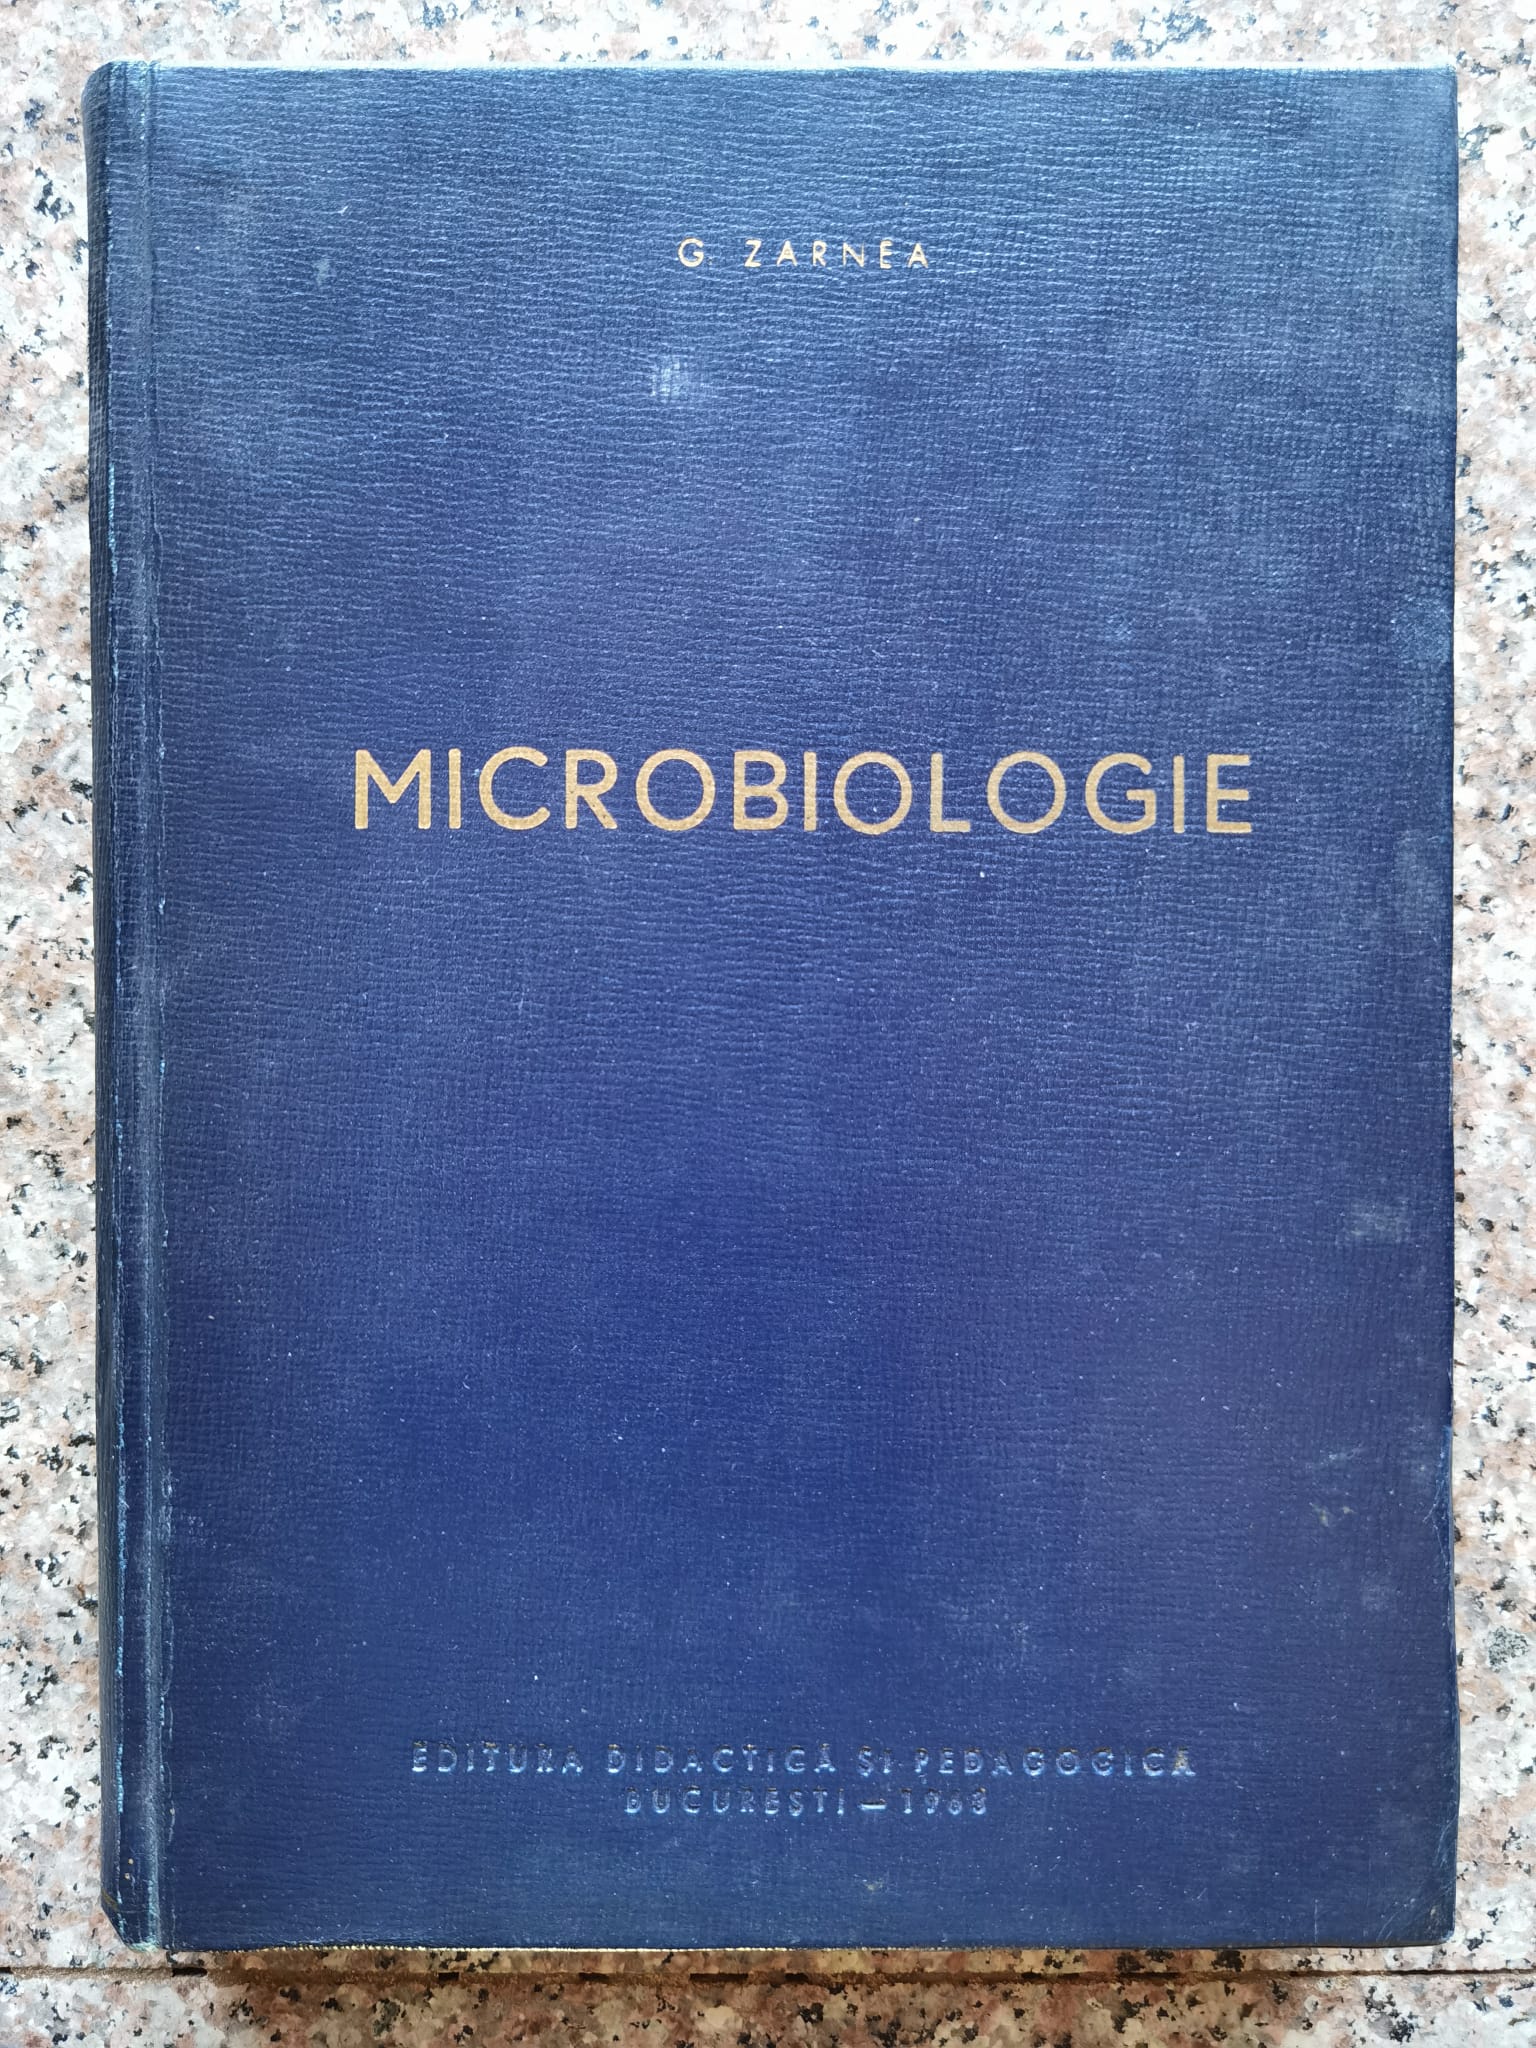 microbiologie                                                                                        g. zarnea                                                                                           